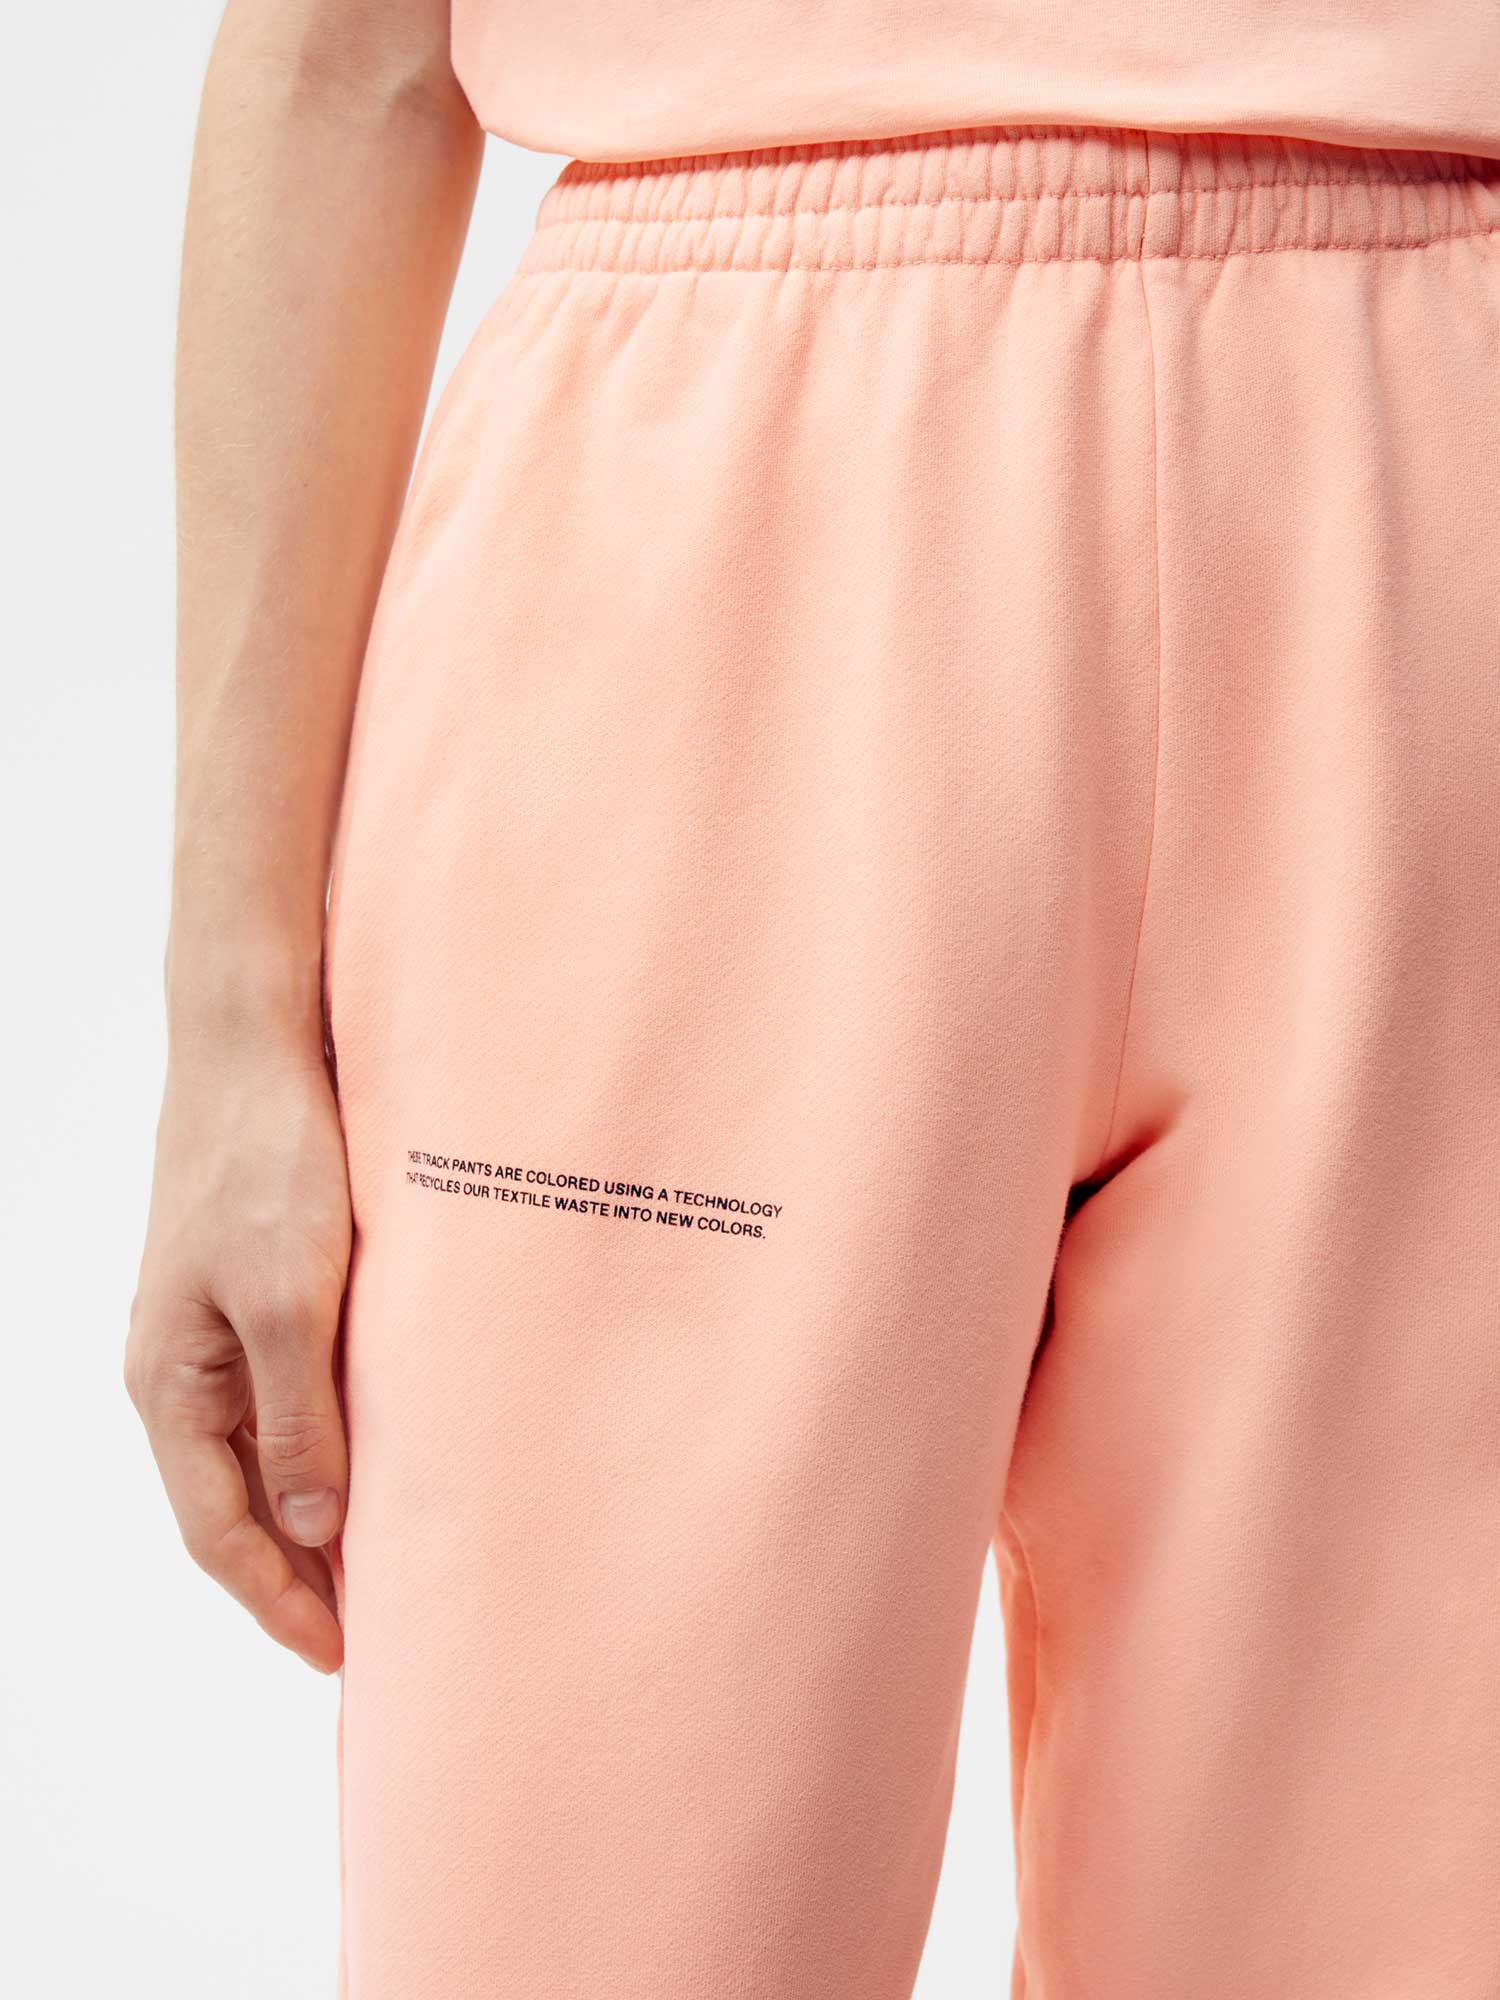 Adidas Originals Her Studio London Women's Track Pants Bottoms Colorful  GN3358 | eBay